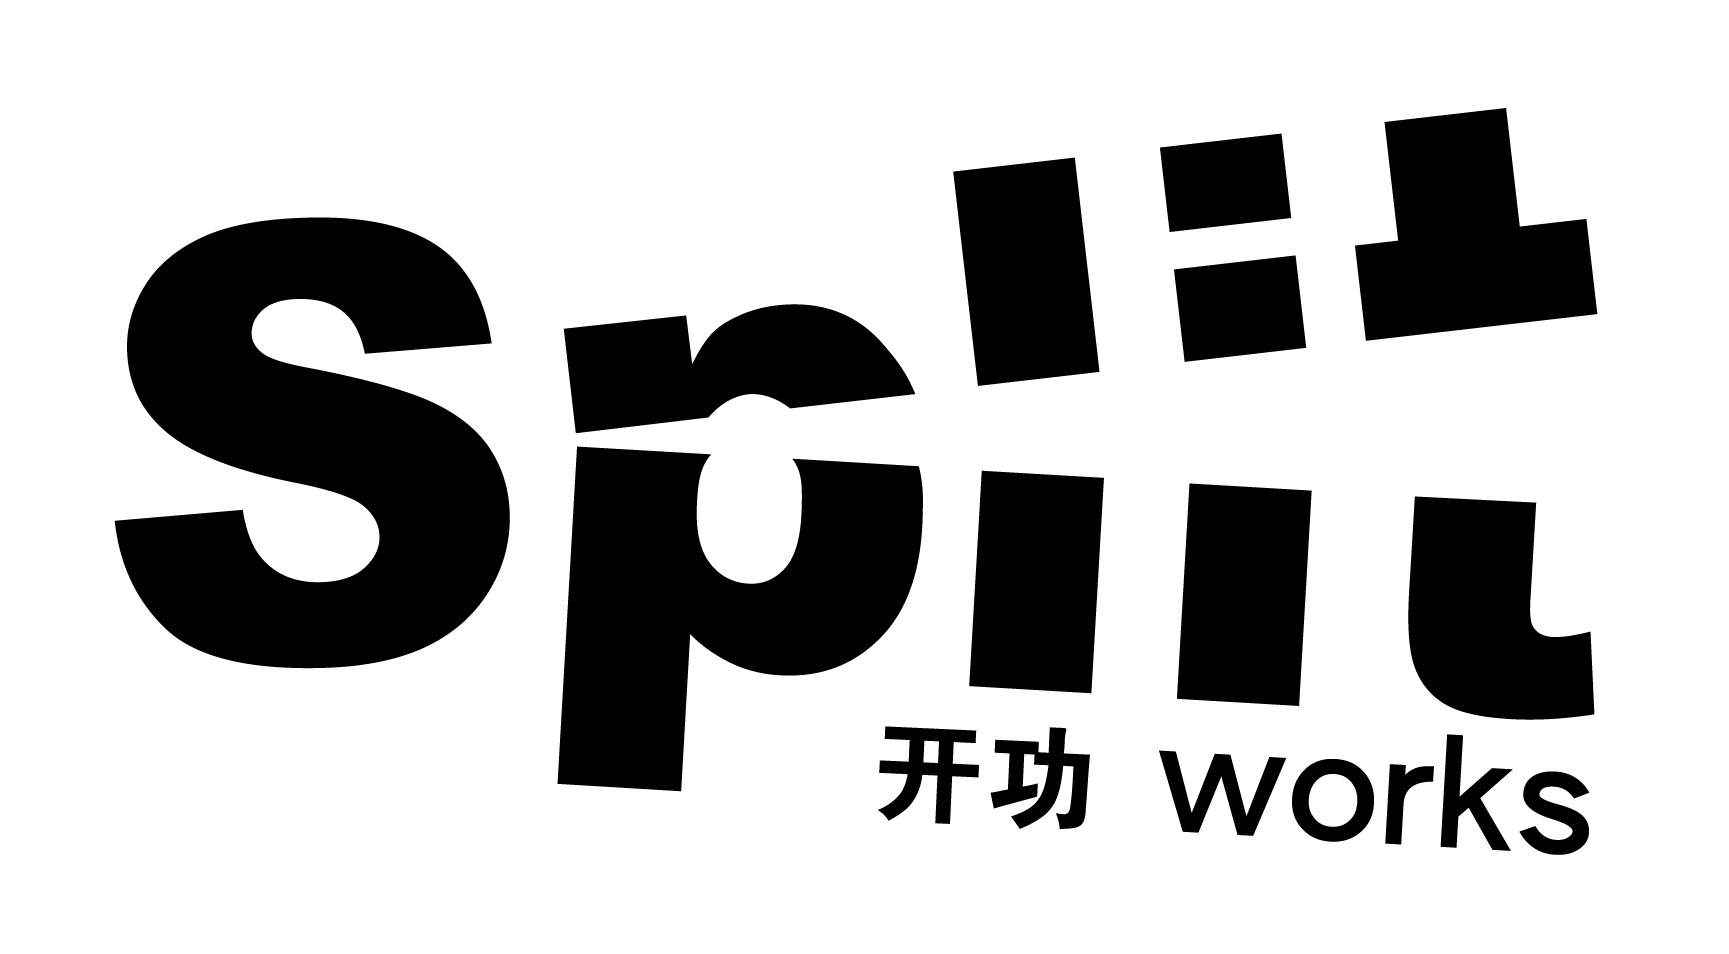 split works